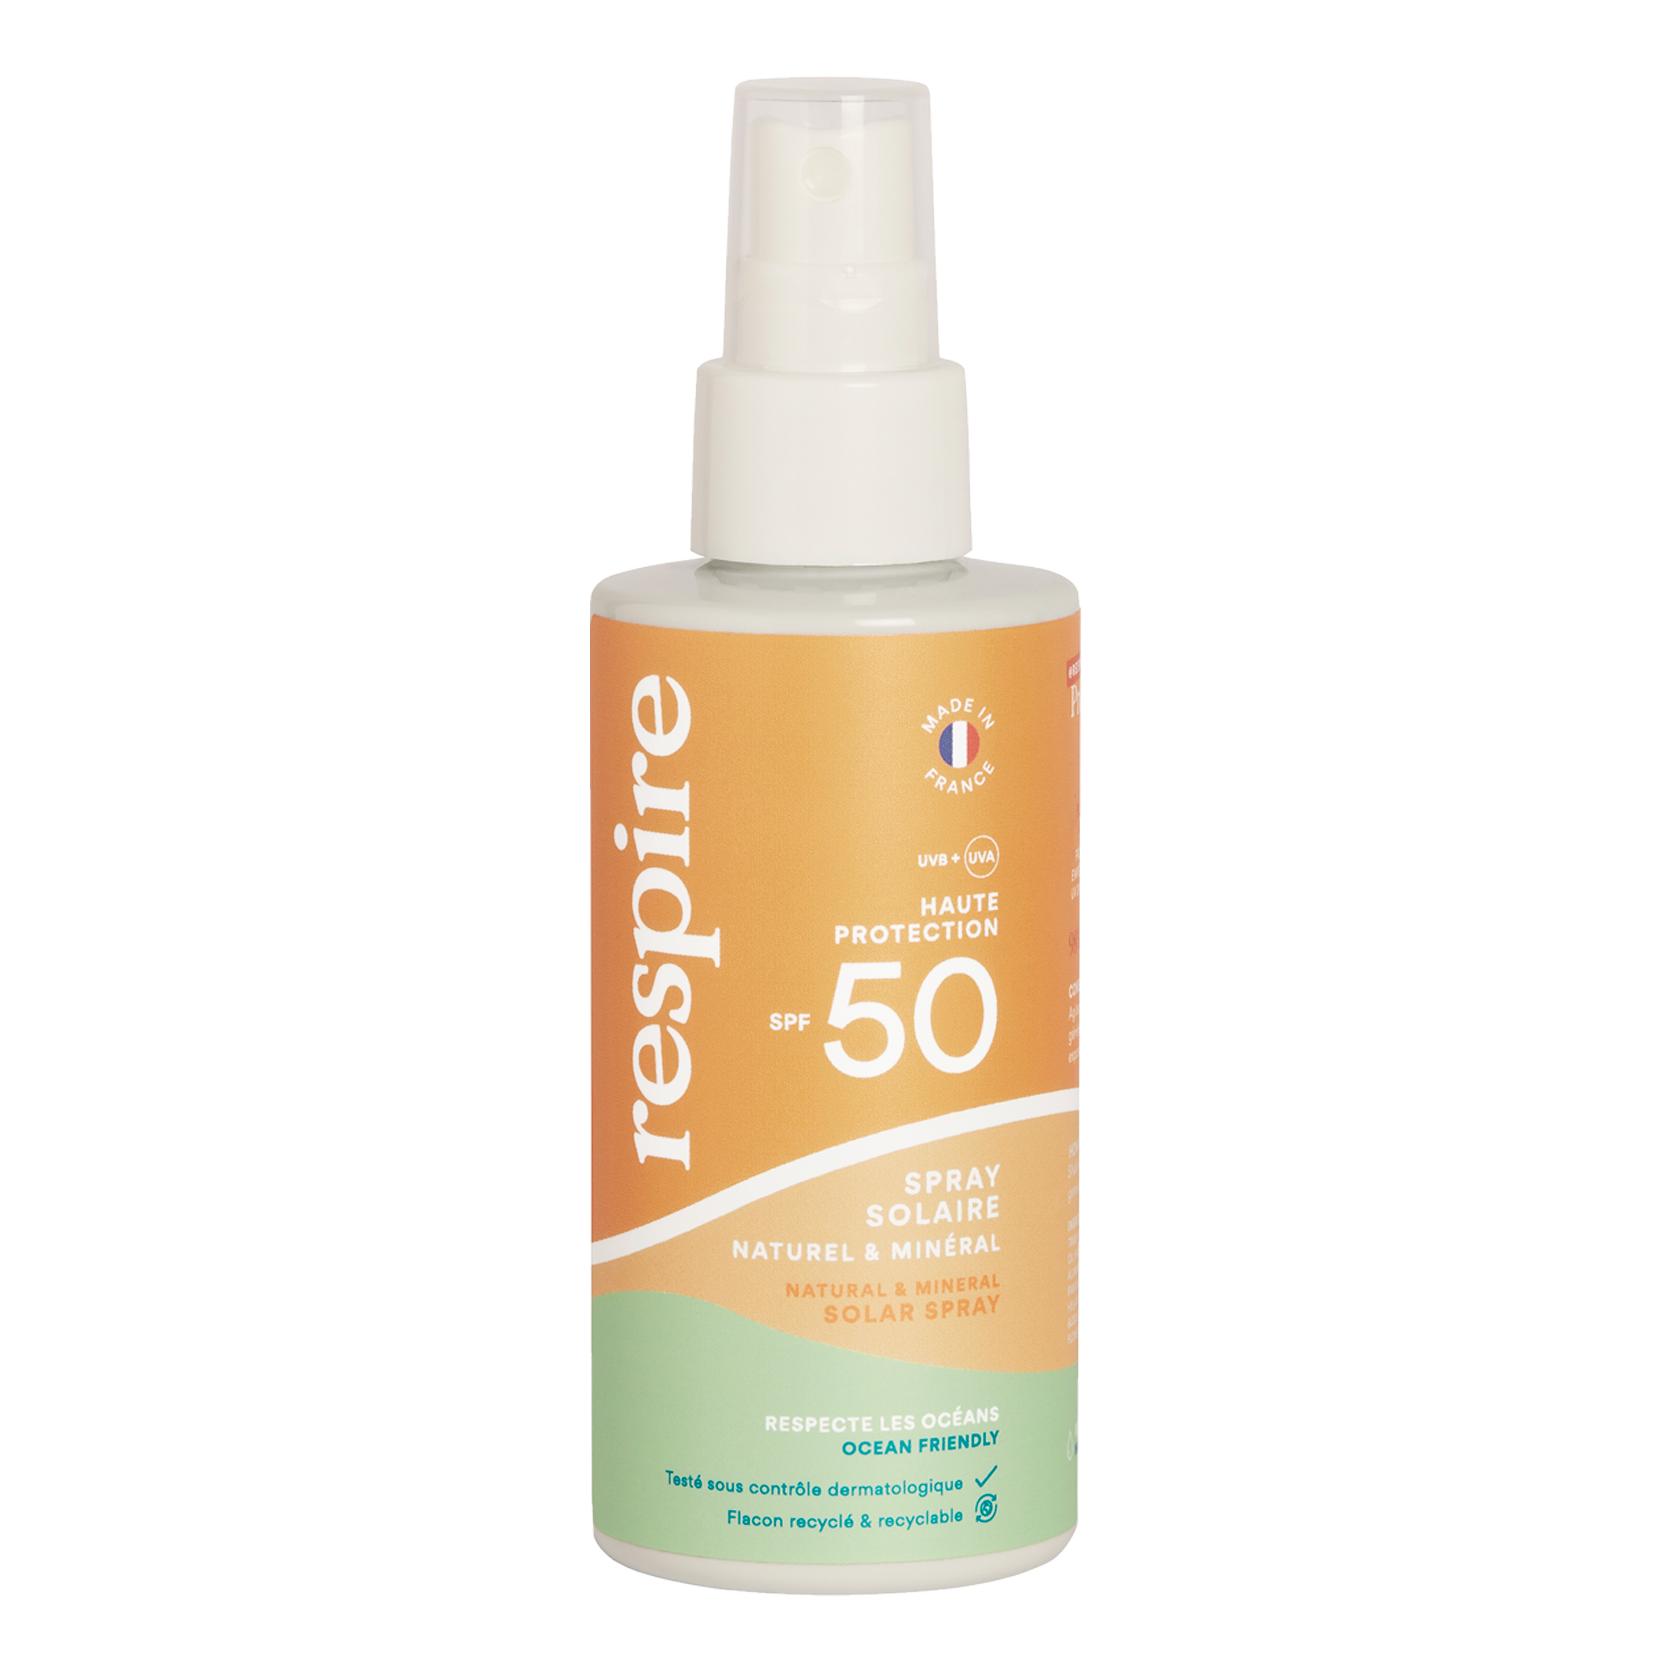 Respire Spray Solaire Naturel & Minéral Spf 50 - 120ml Orange 